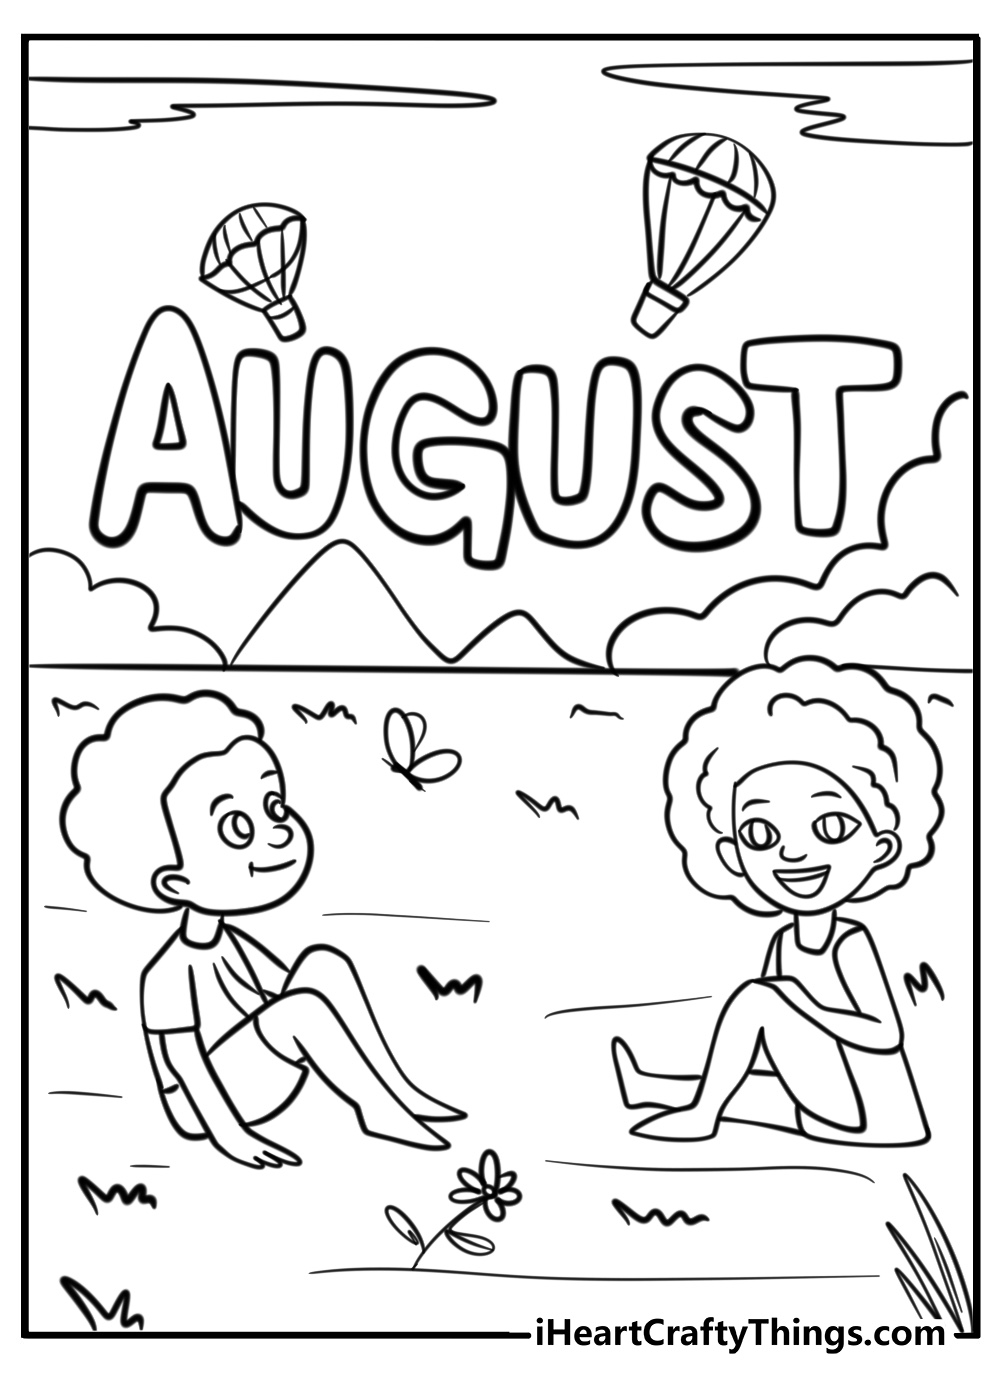 Fun august printable for kids